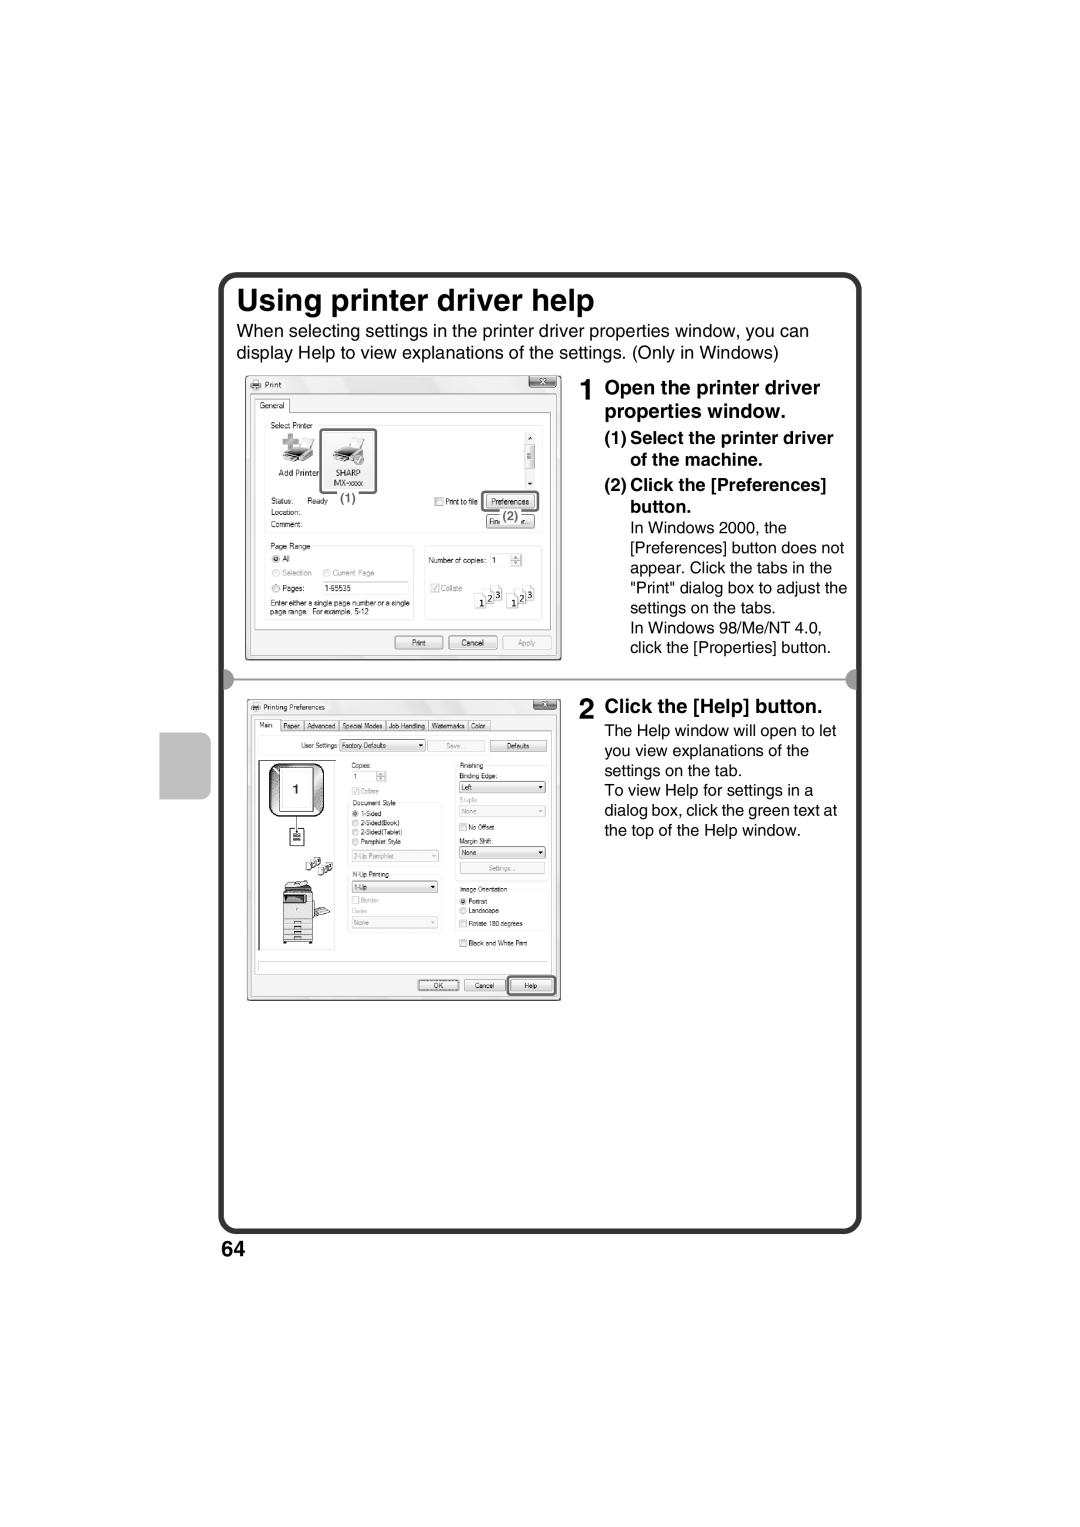 Sharp MX-C311, MX-C381 Using printer driver help, Click the Help button, Open the printer driver properties window 